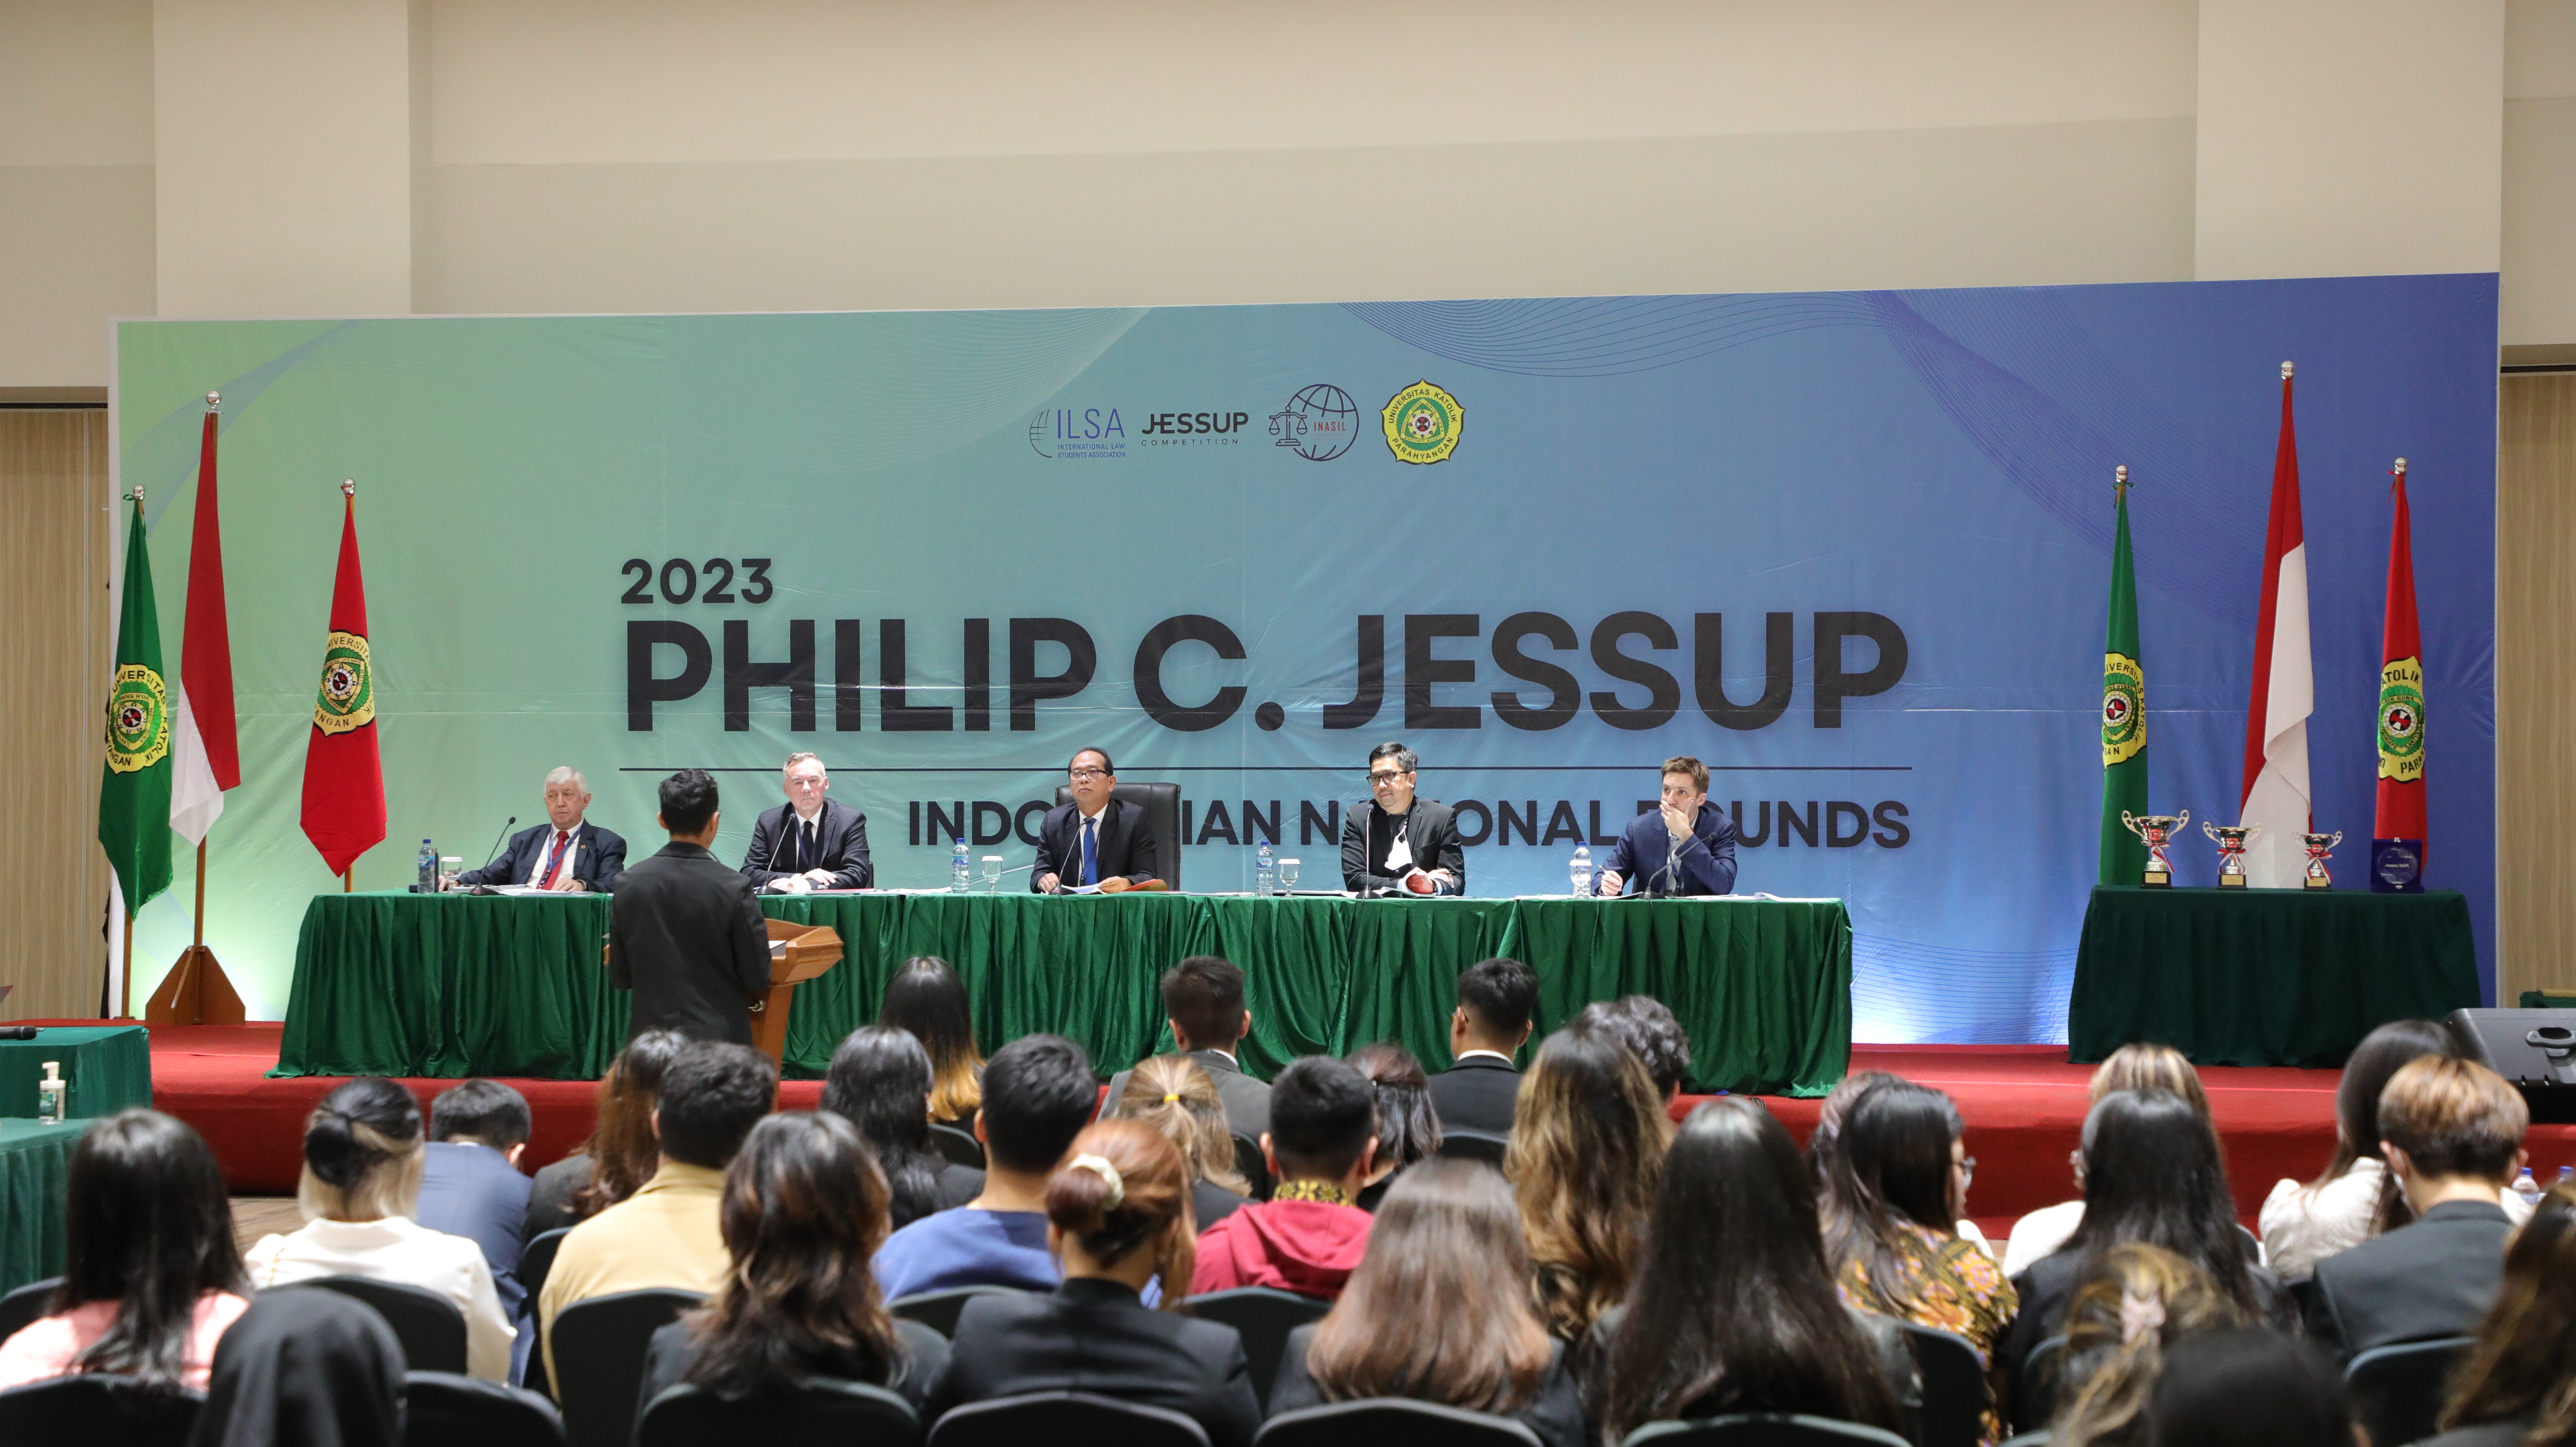 HAKIM AGUNG MENJADI JUDGES PADA NATIONAL ROUNDS PHILIP C. JESSUP INTERNATIONAL LAW MOOT COURT COMPETITION 2023